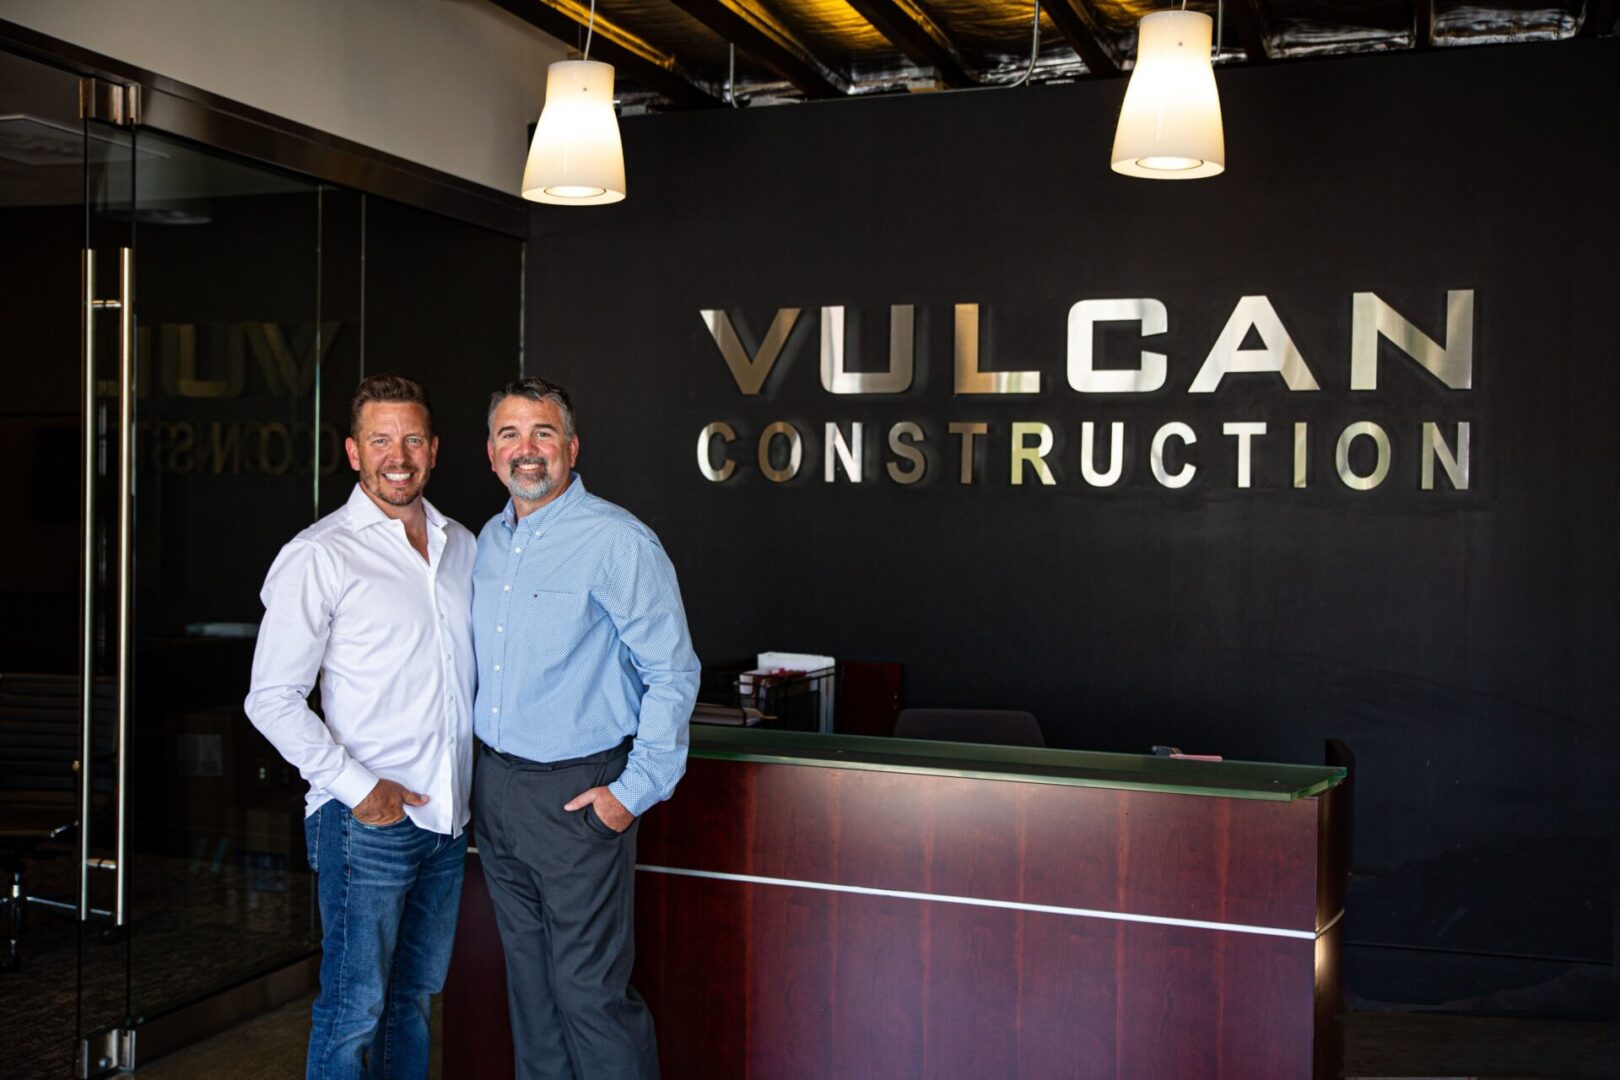 Vulcan Construction, Inc